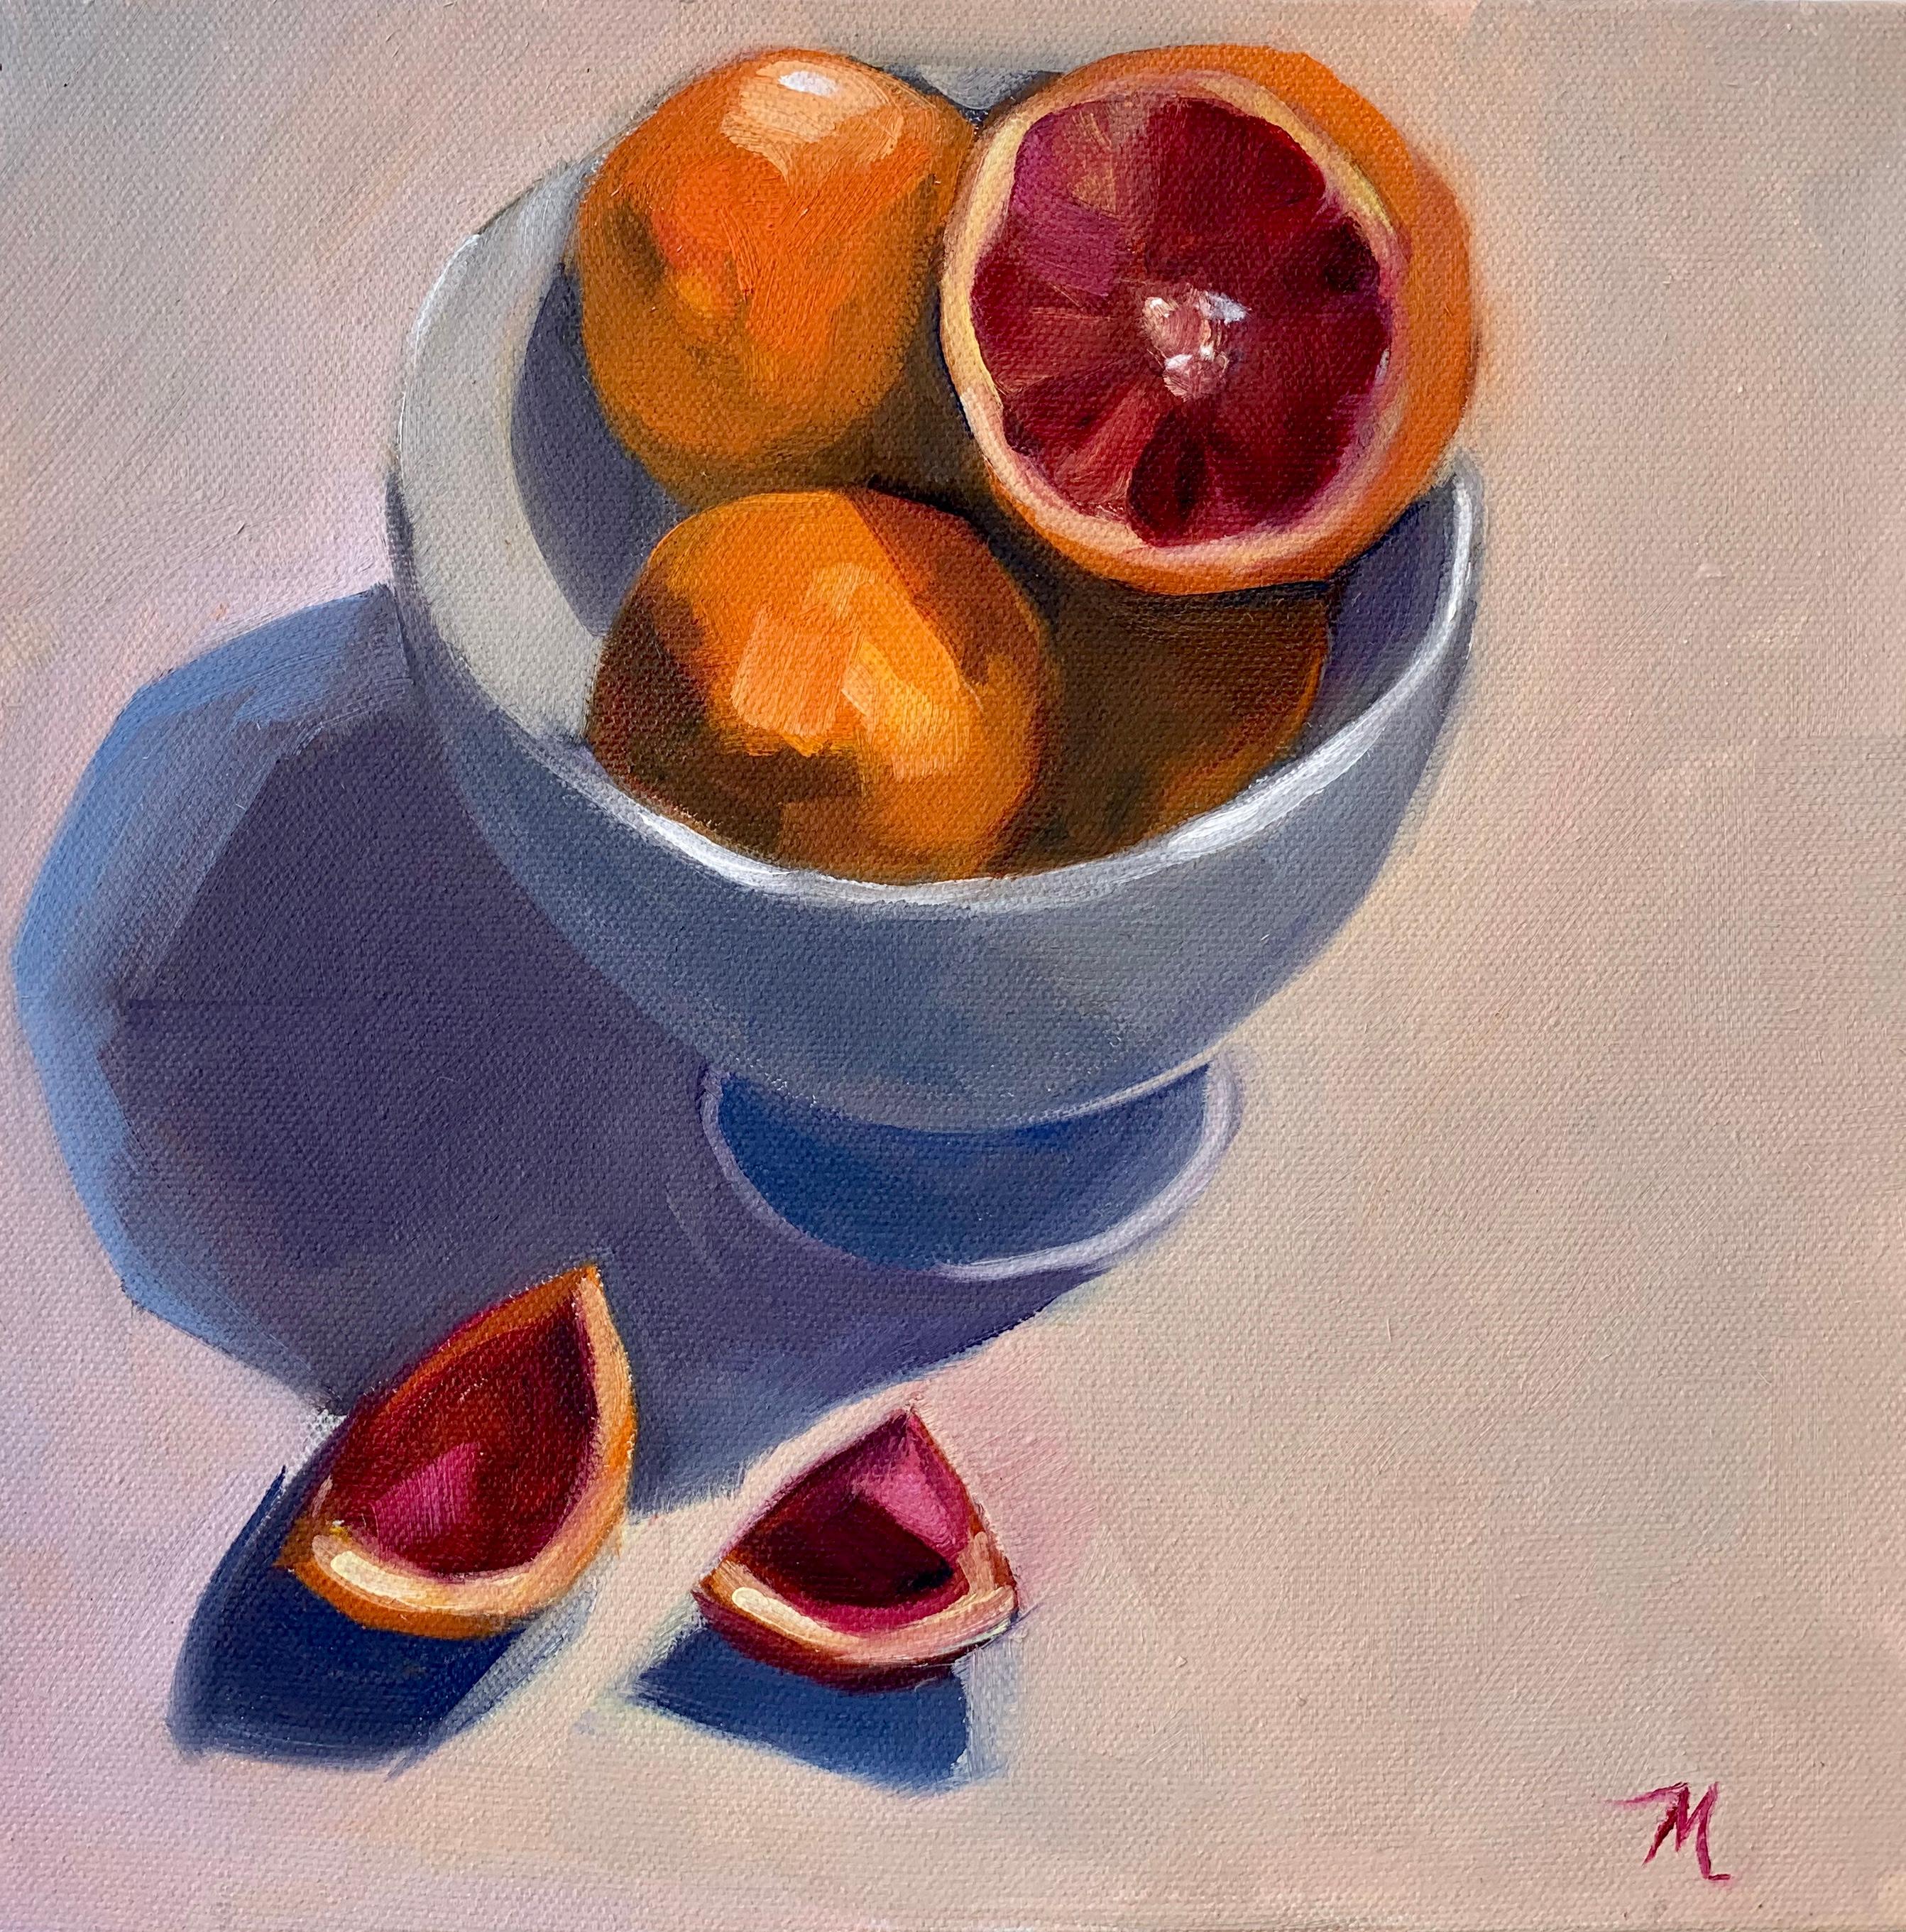 Bowl of Blood Oranges, Oil Painting